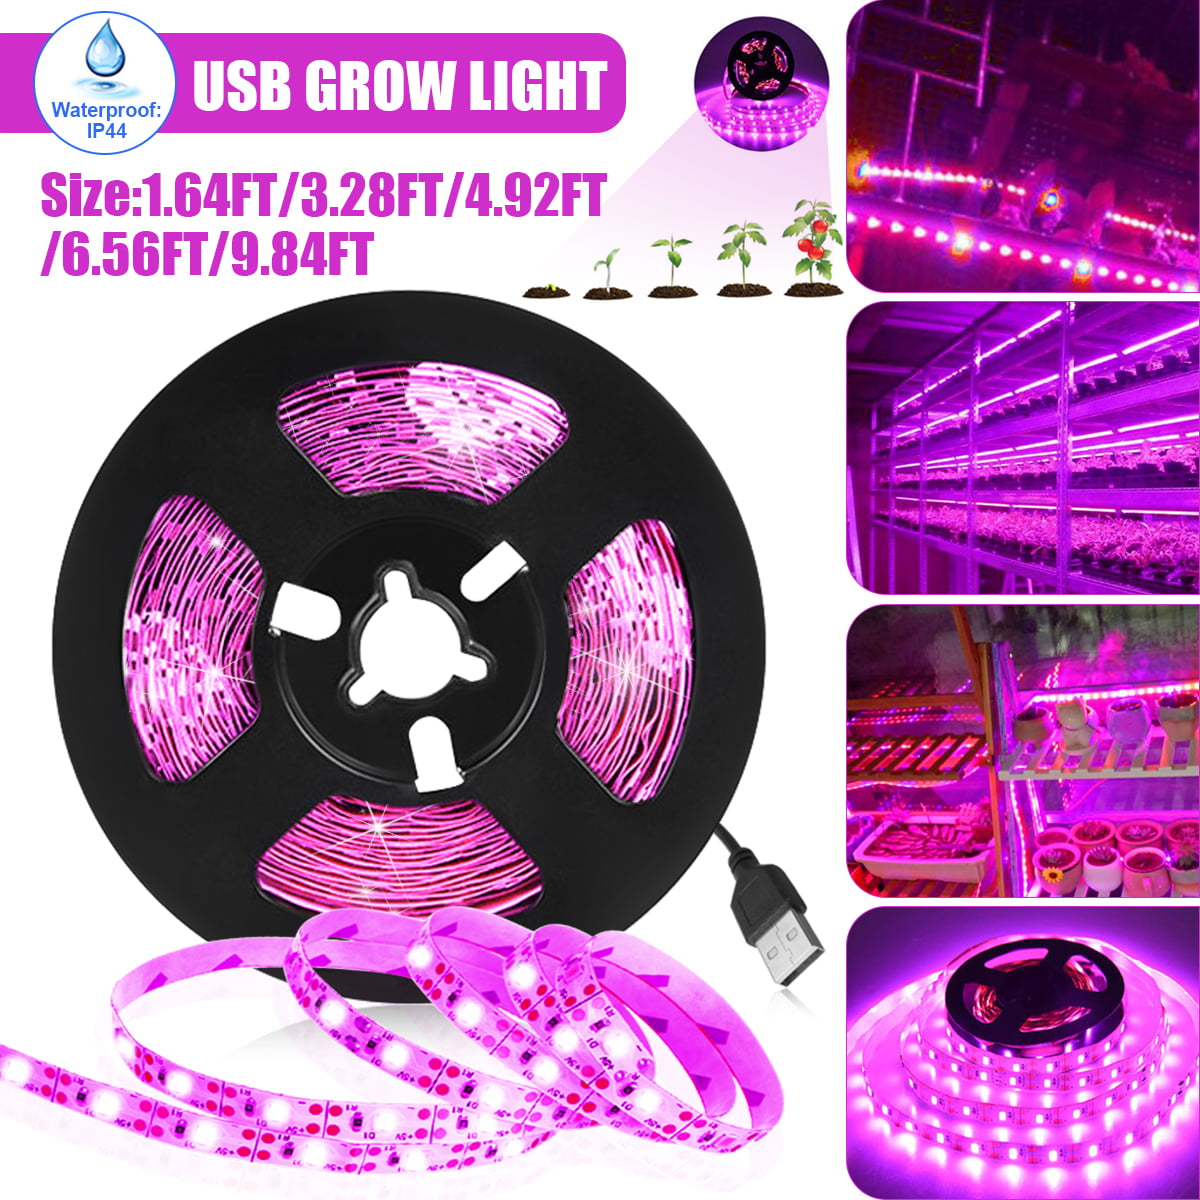 USB LED Grow Light Strip Full Spectrum 2835 LED Strip for Indoor Plant Growing g 